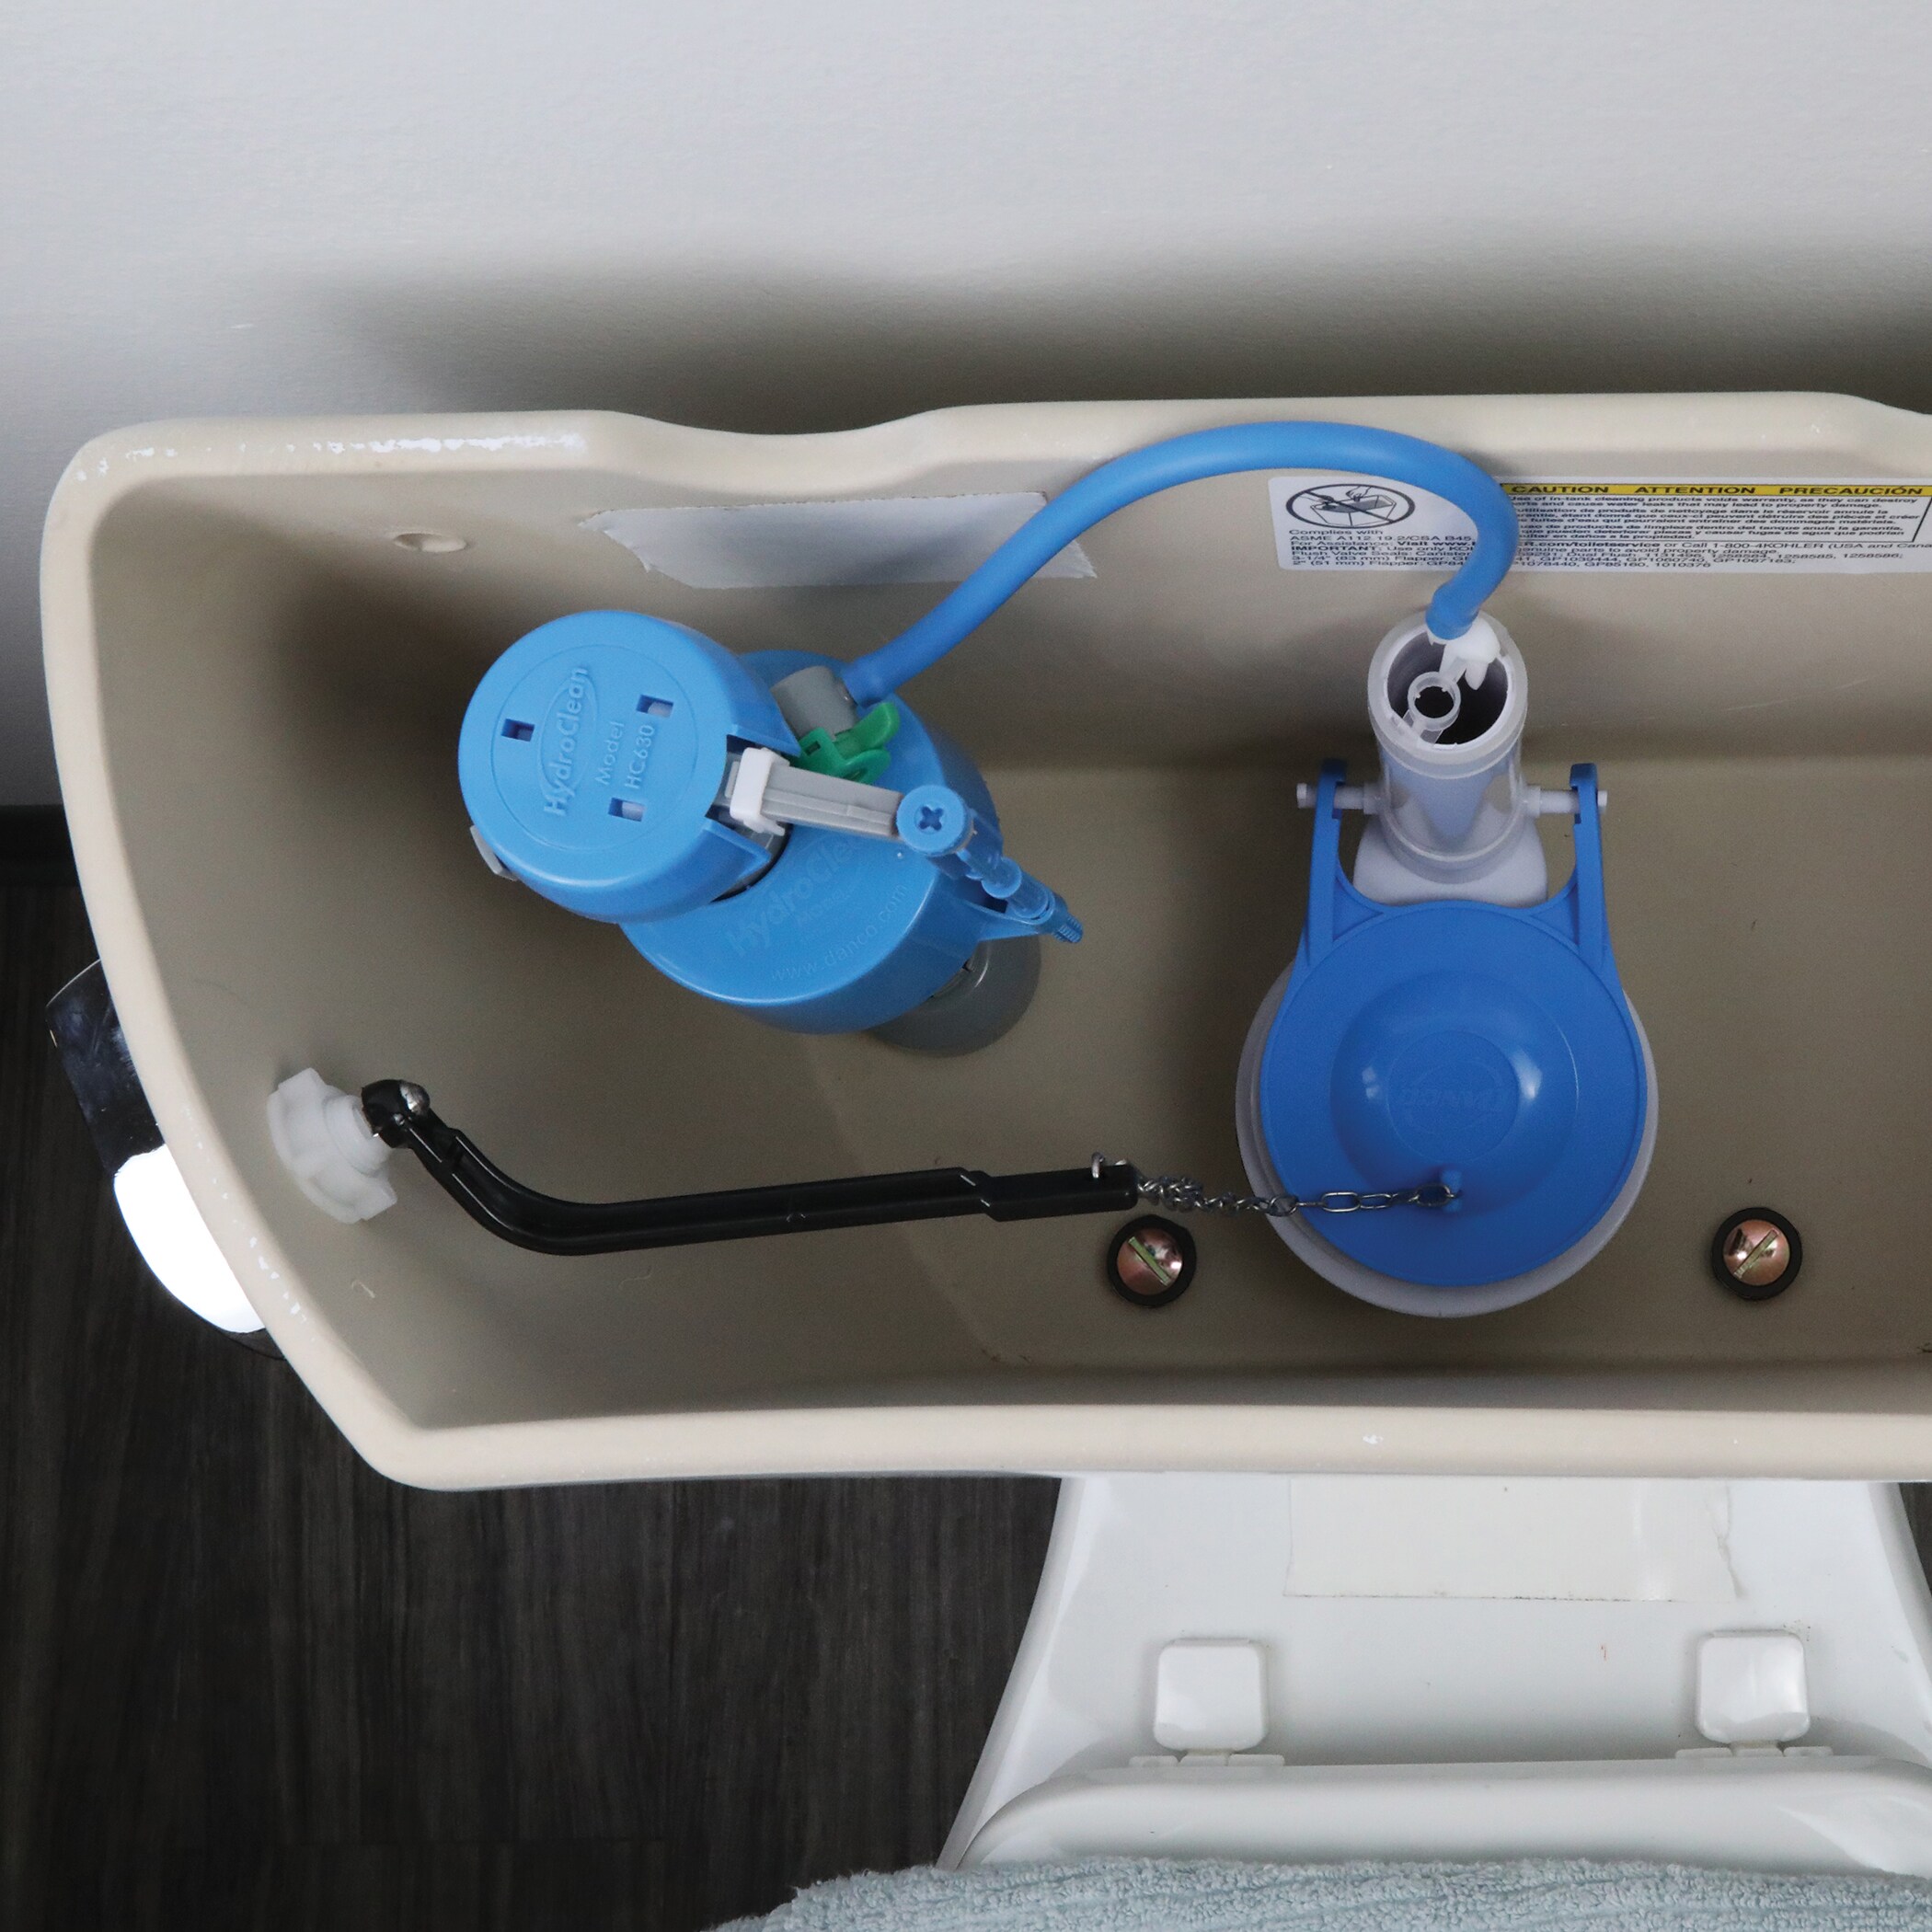 Water-Saving Toilet Repair Kit for 3-inch Flush Valve Toilets - Danco